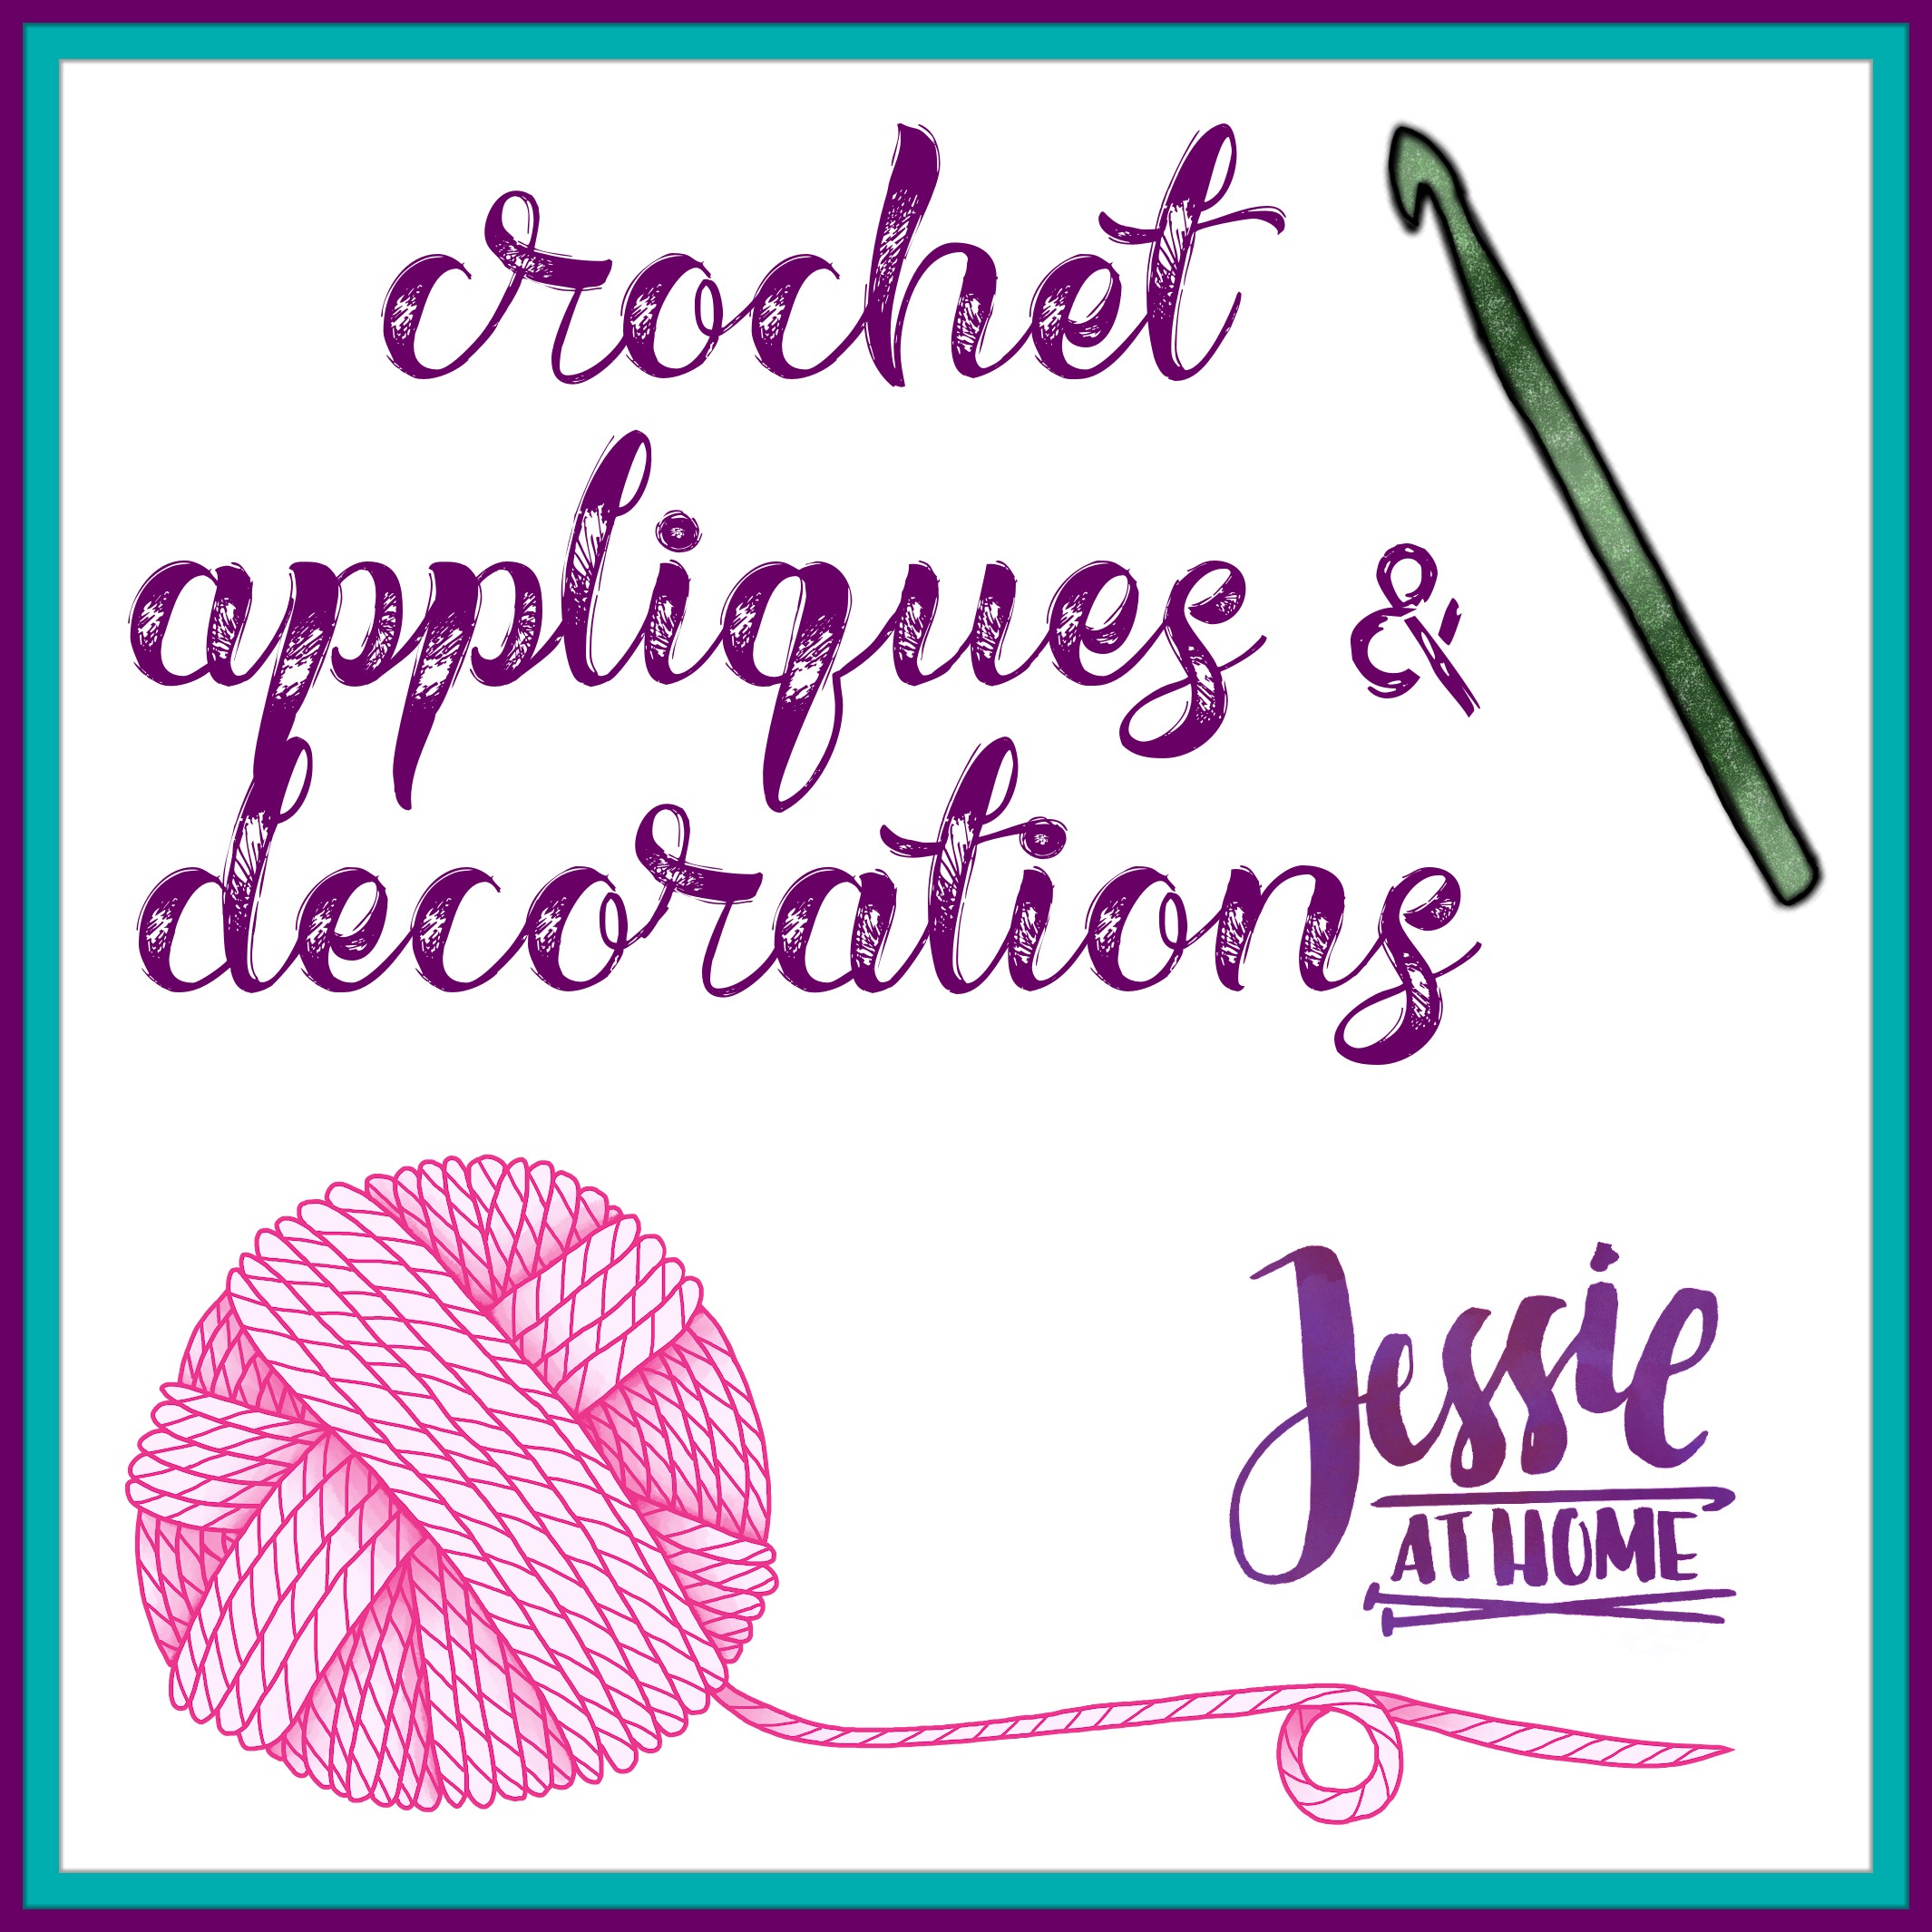 Crochet Appliques & Decorations Menu on Jessie At Home